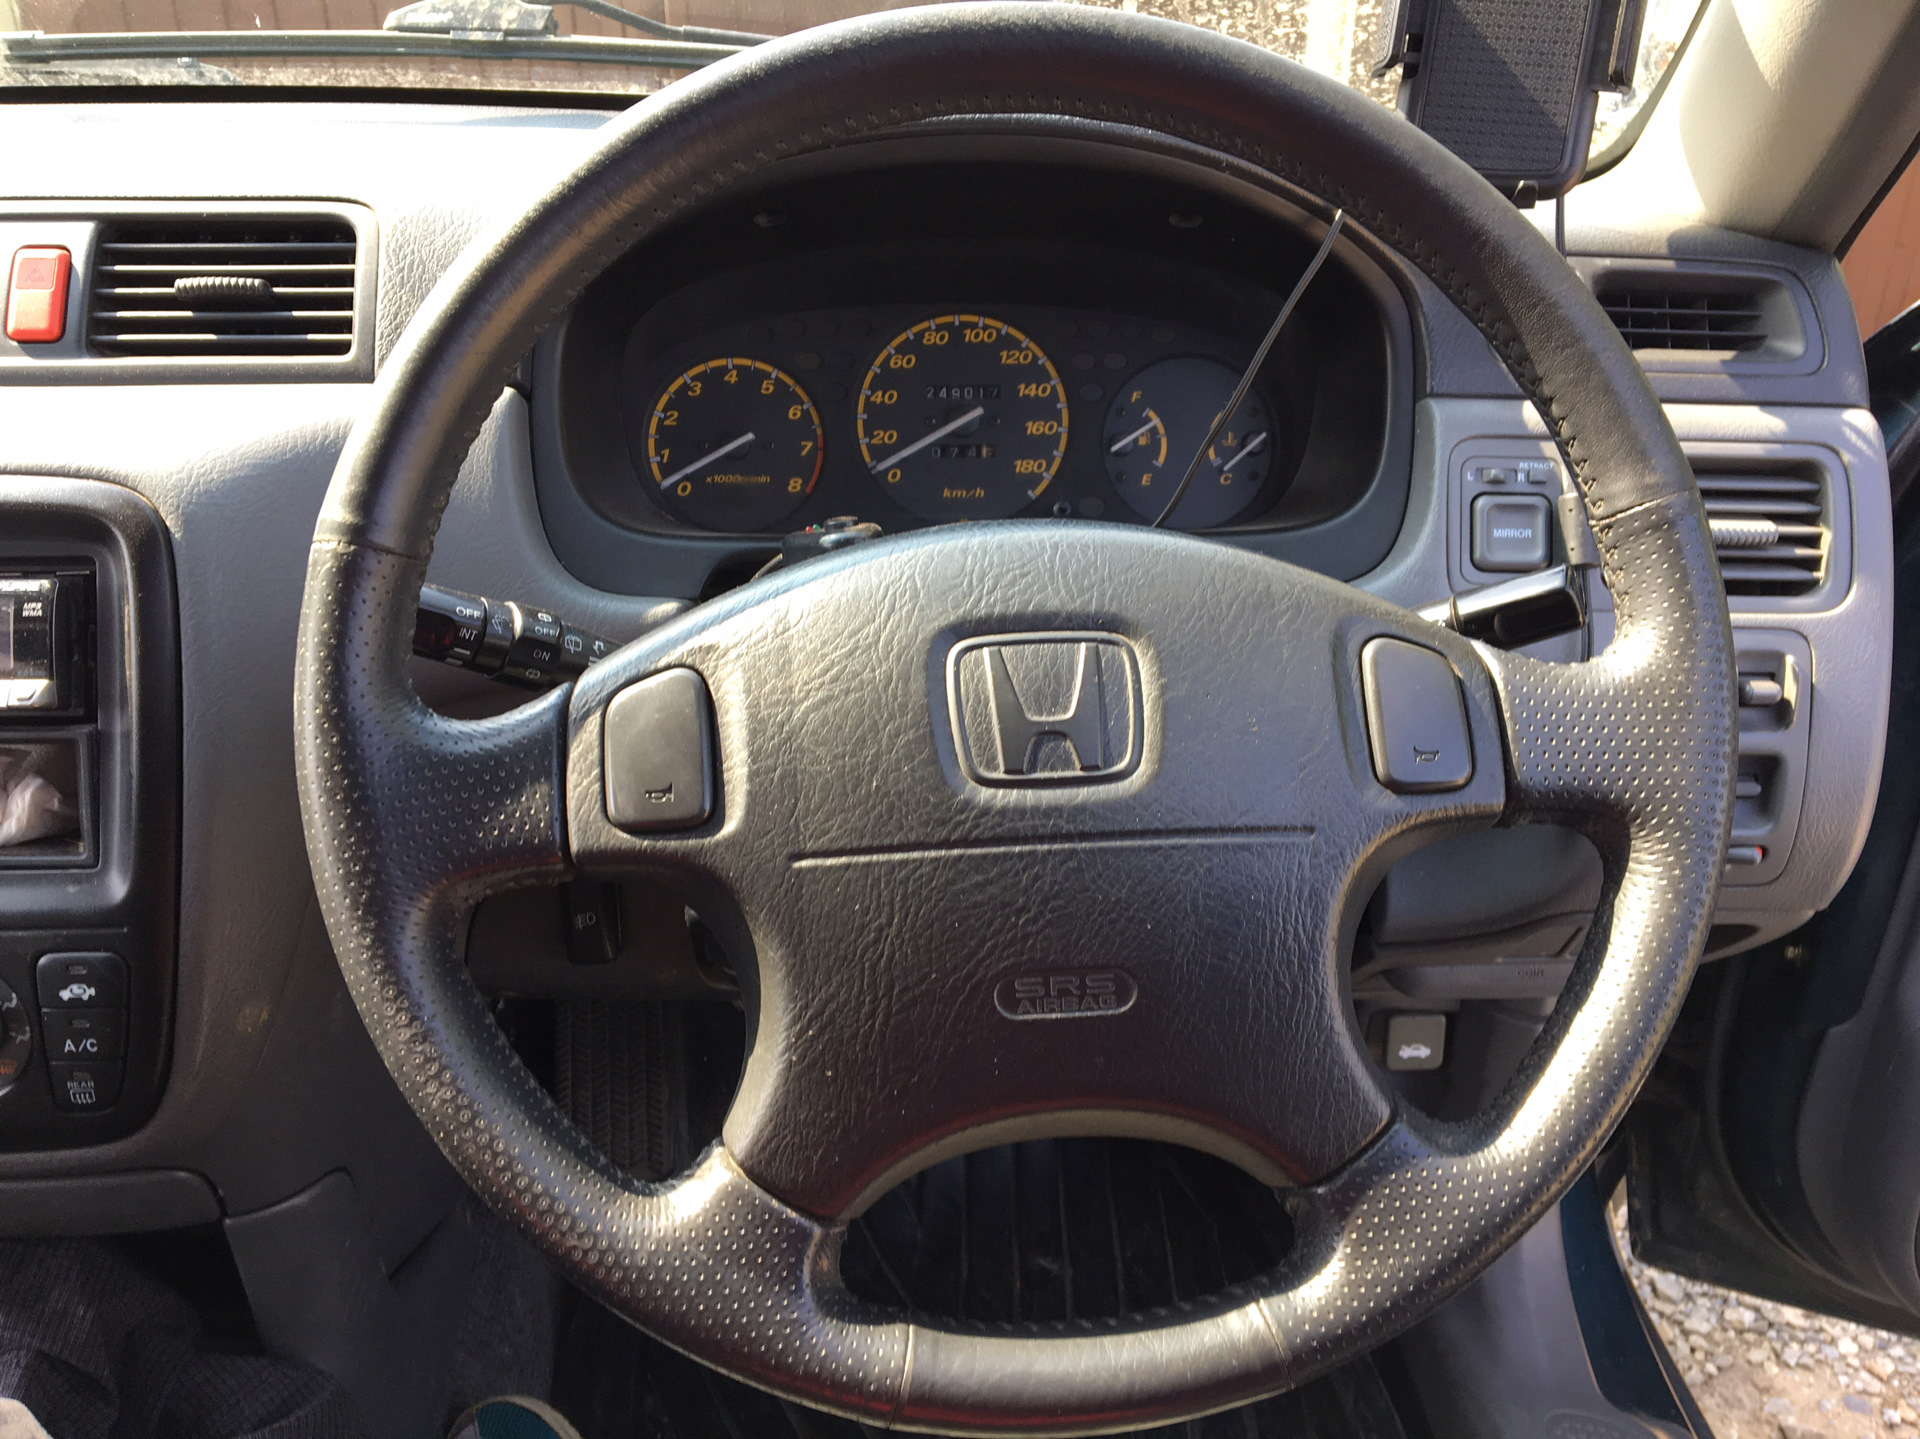 Honda crv руль. Руль Хонда СРВ рд1. Руль CRV 1998. Honda CR-V rd1 кожаный руль. Руль Хонда СРВ 2.